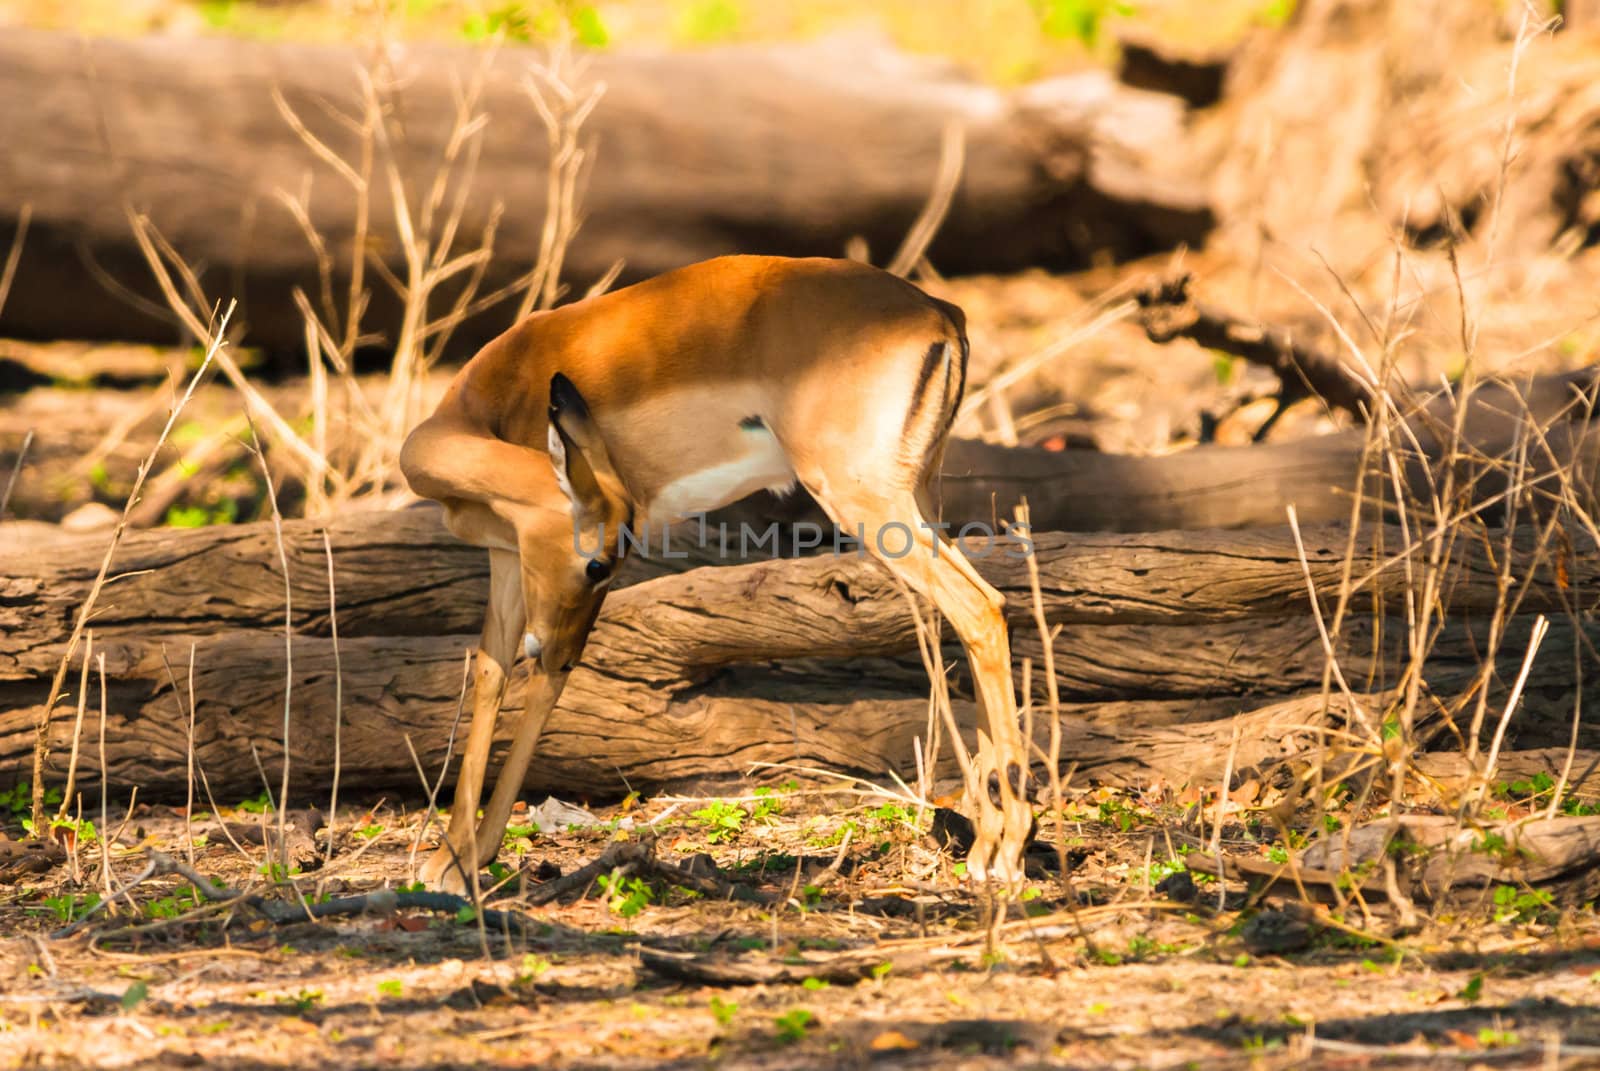 Impala ewe by edan